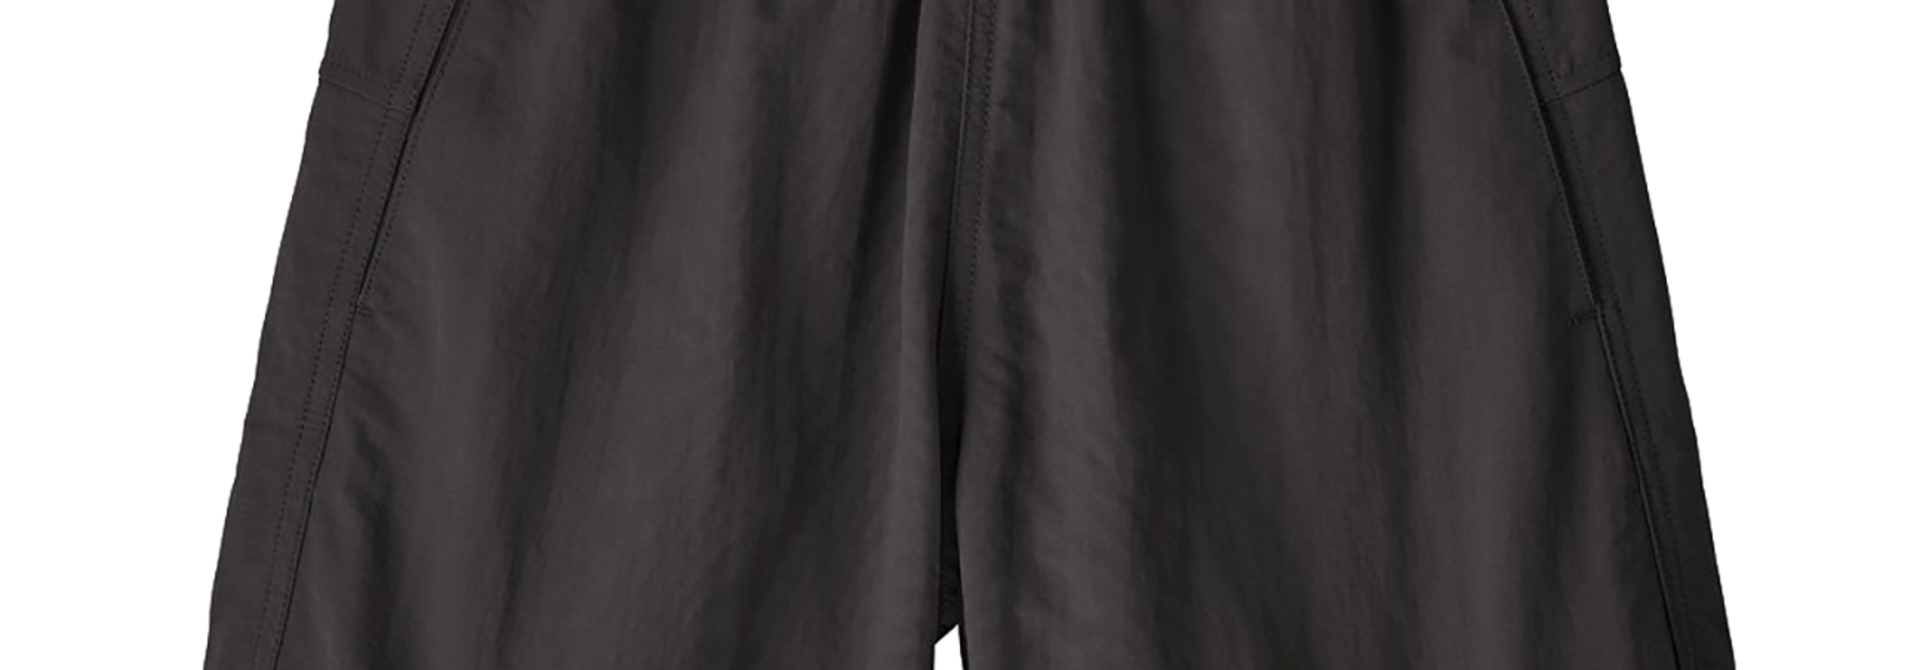 Women's Baggies Shorts, Black - 5"